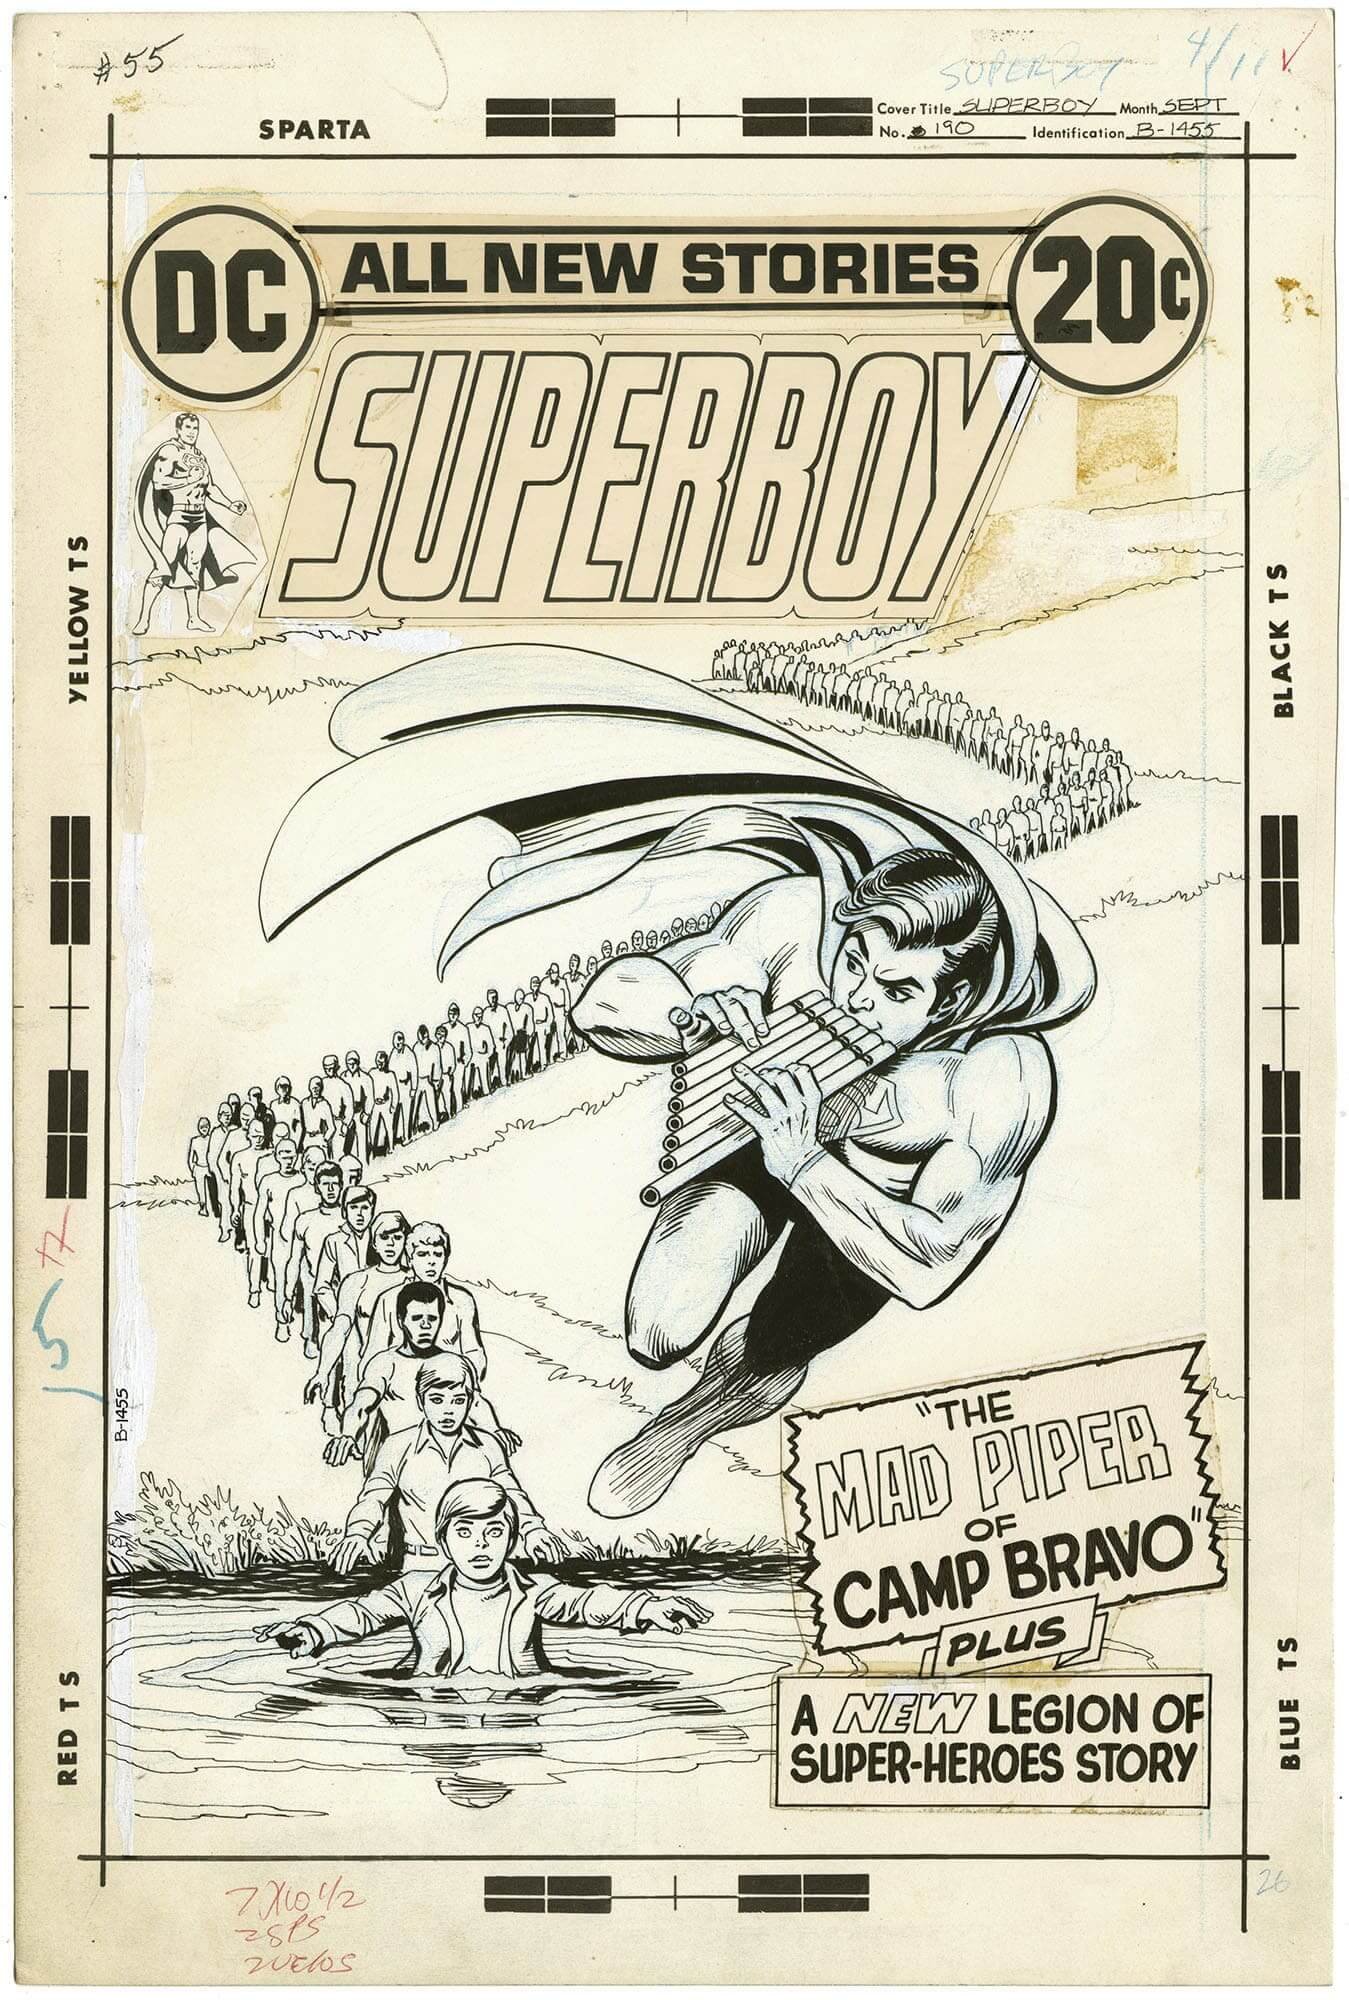 Superboy #190 Cover